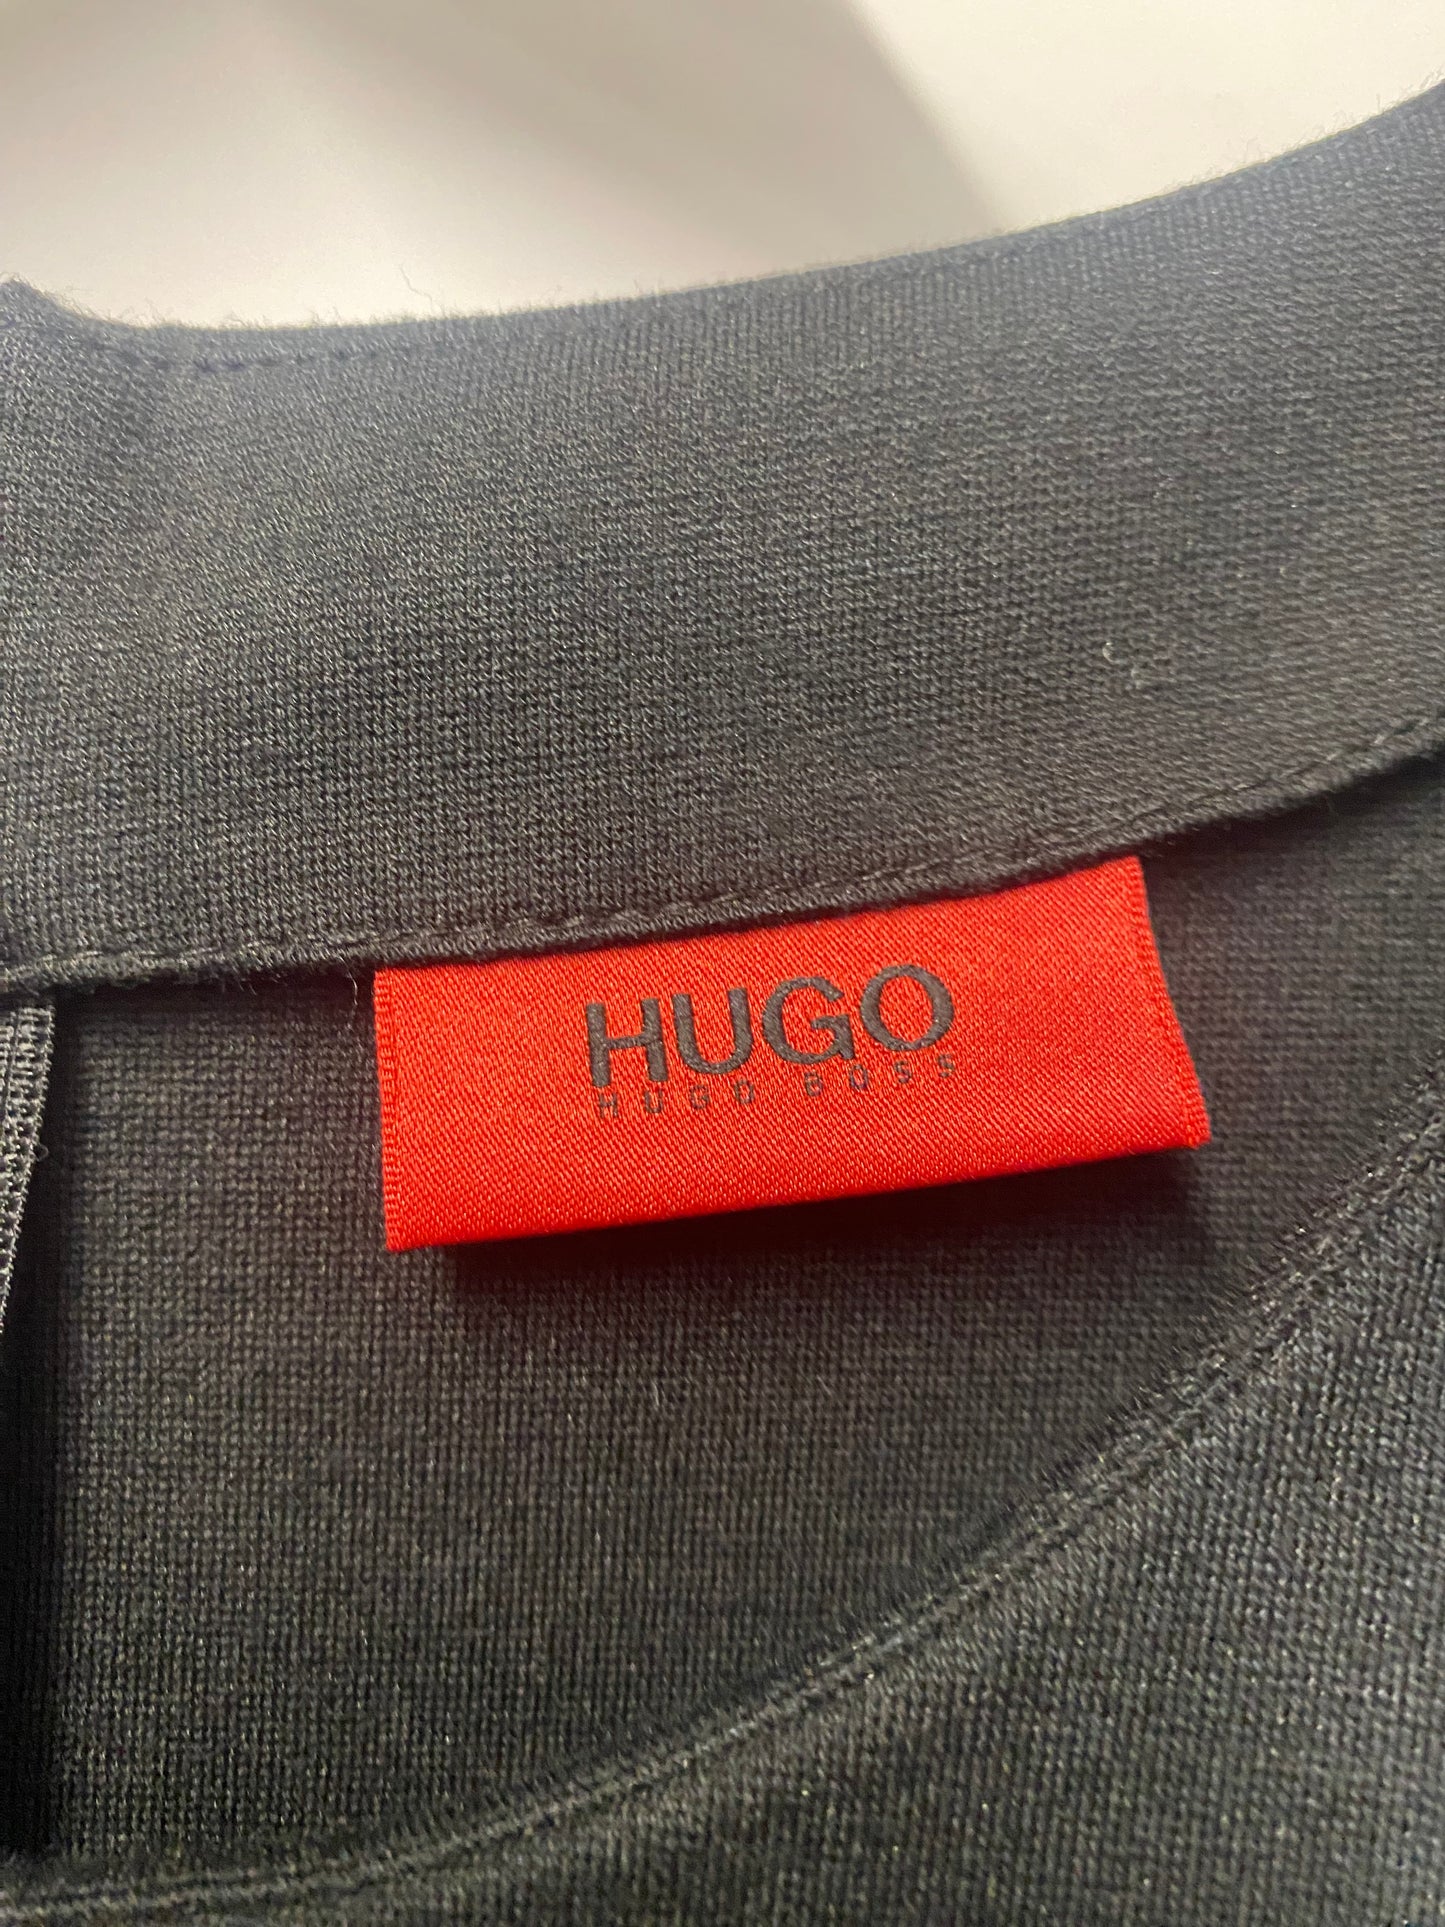 Hugo Boss Black Simple Sheath Mid Length Work Dress XL